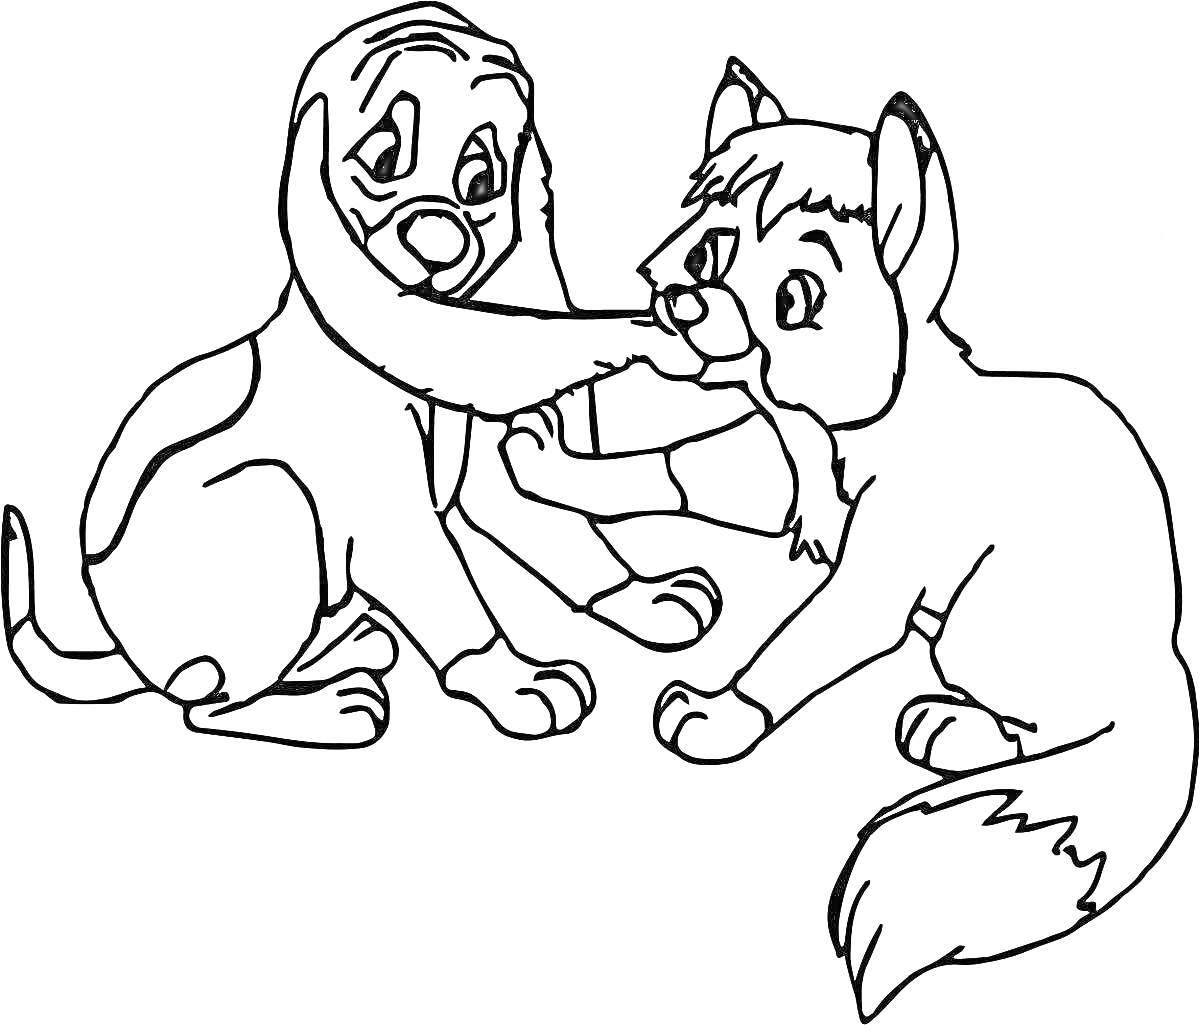 Раскраска собака и кошка, играющие вместе